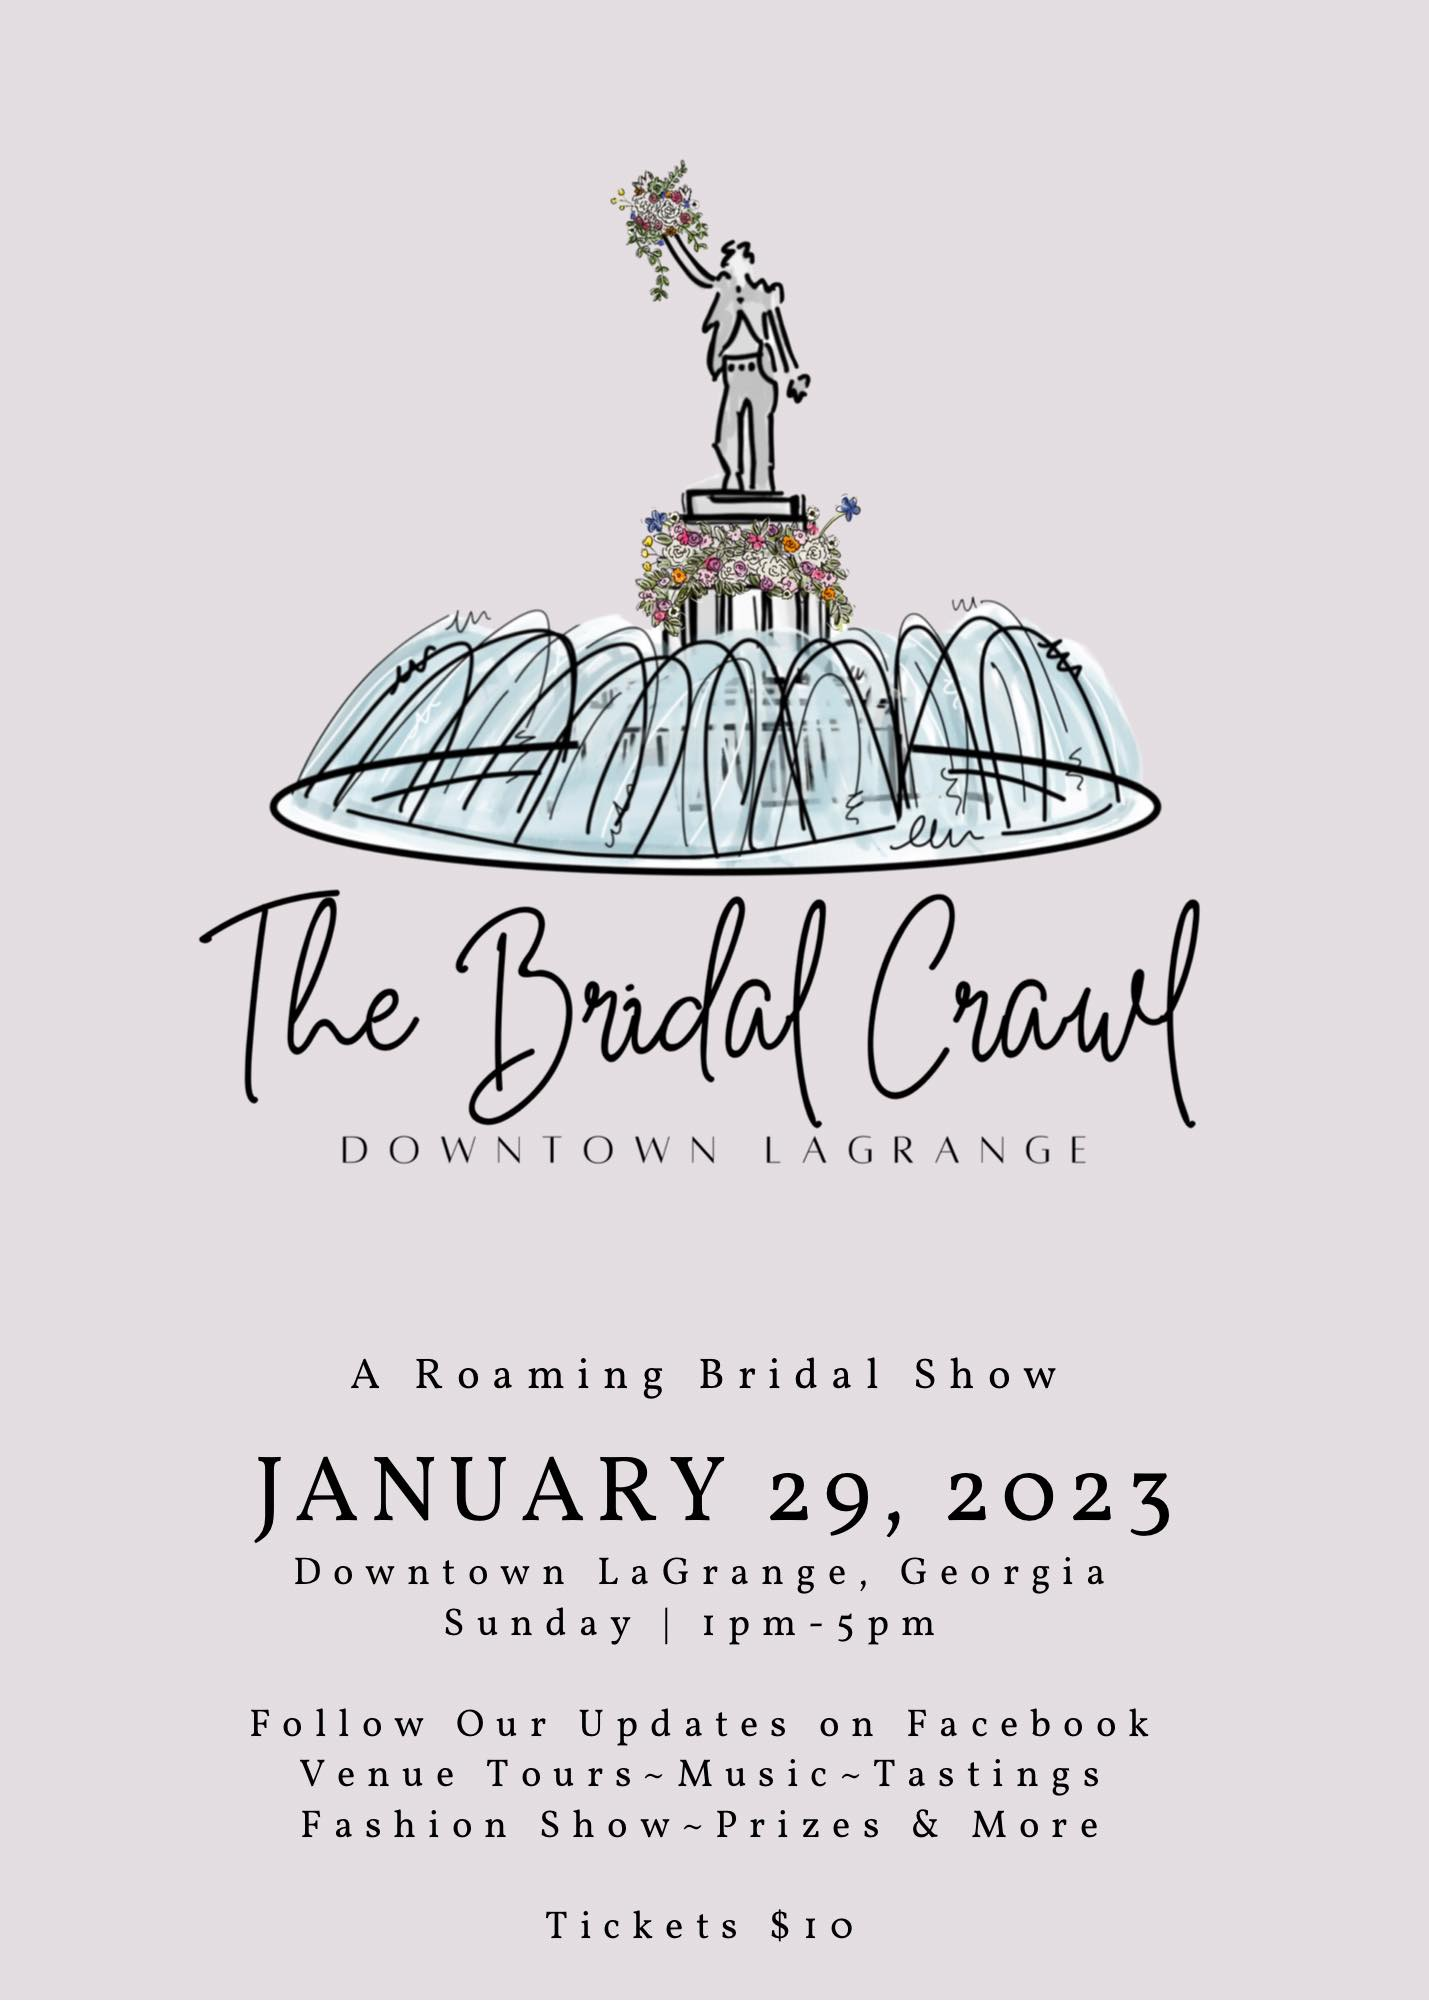 Image for post: Downtown LaGrange Bridal Crawl - January 2023